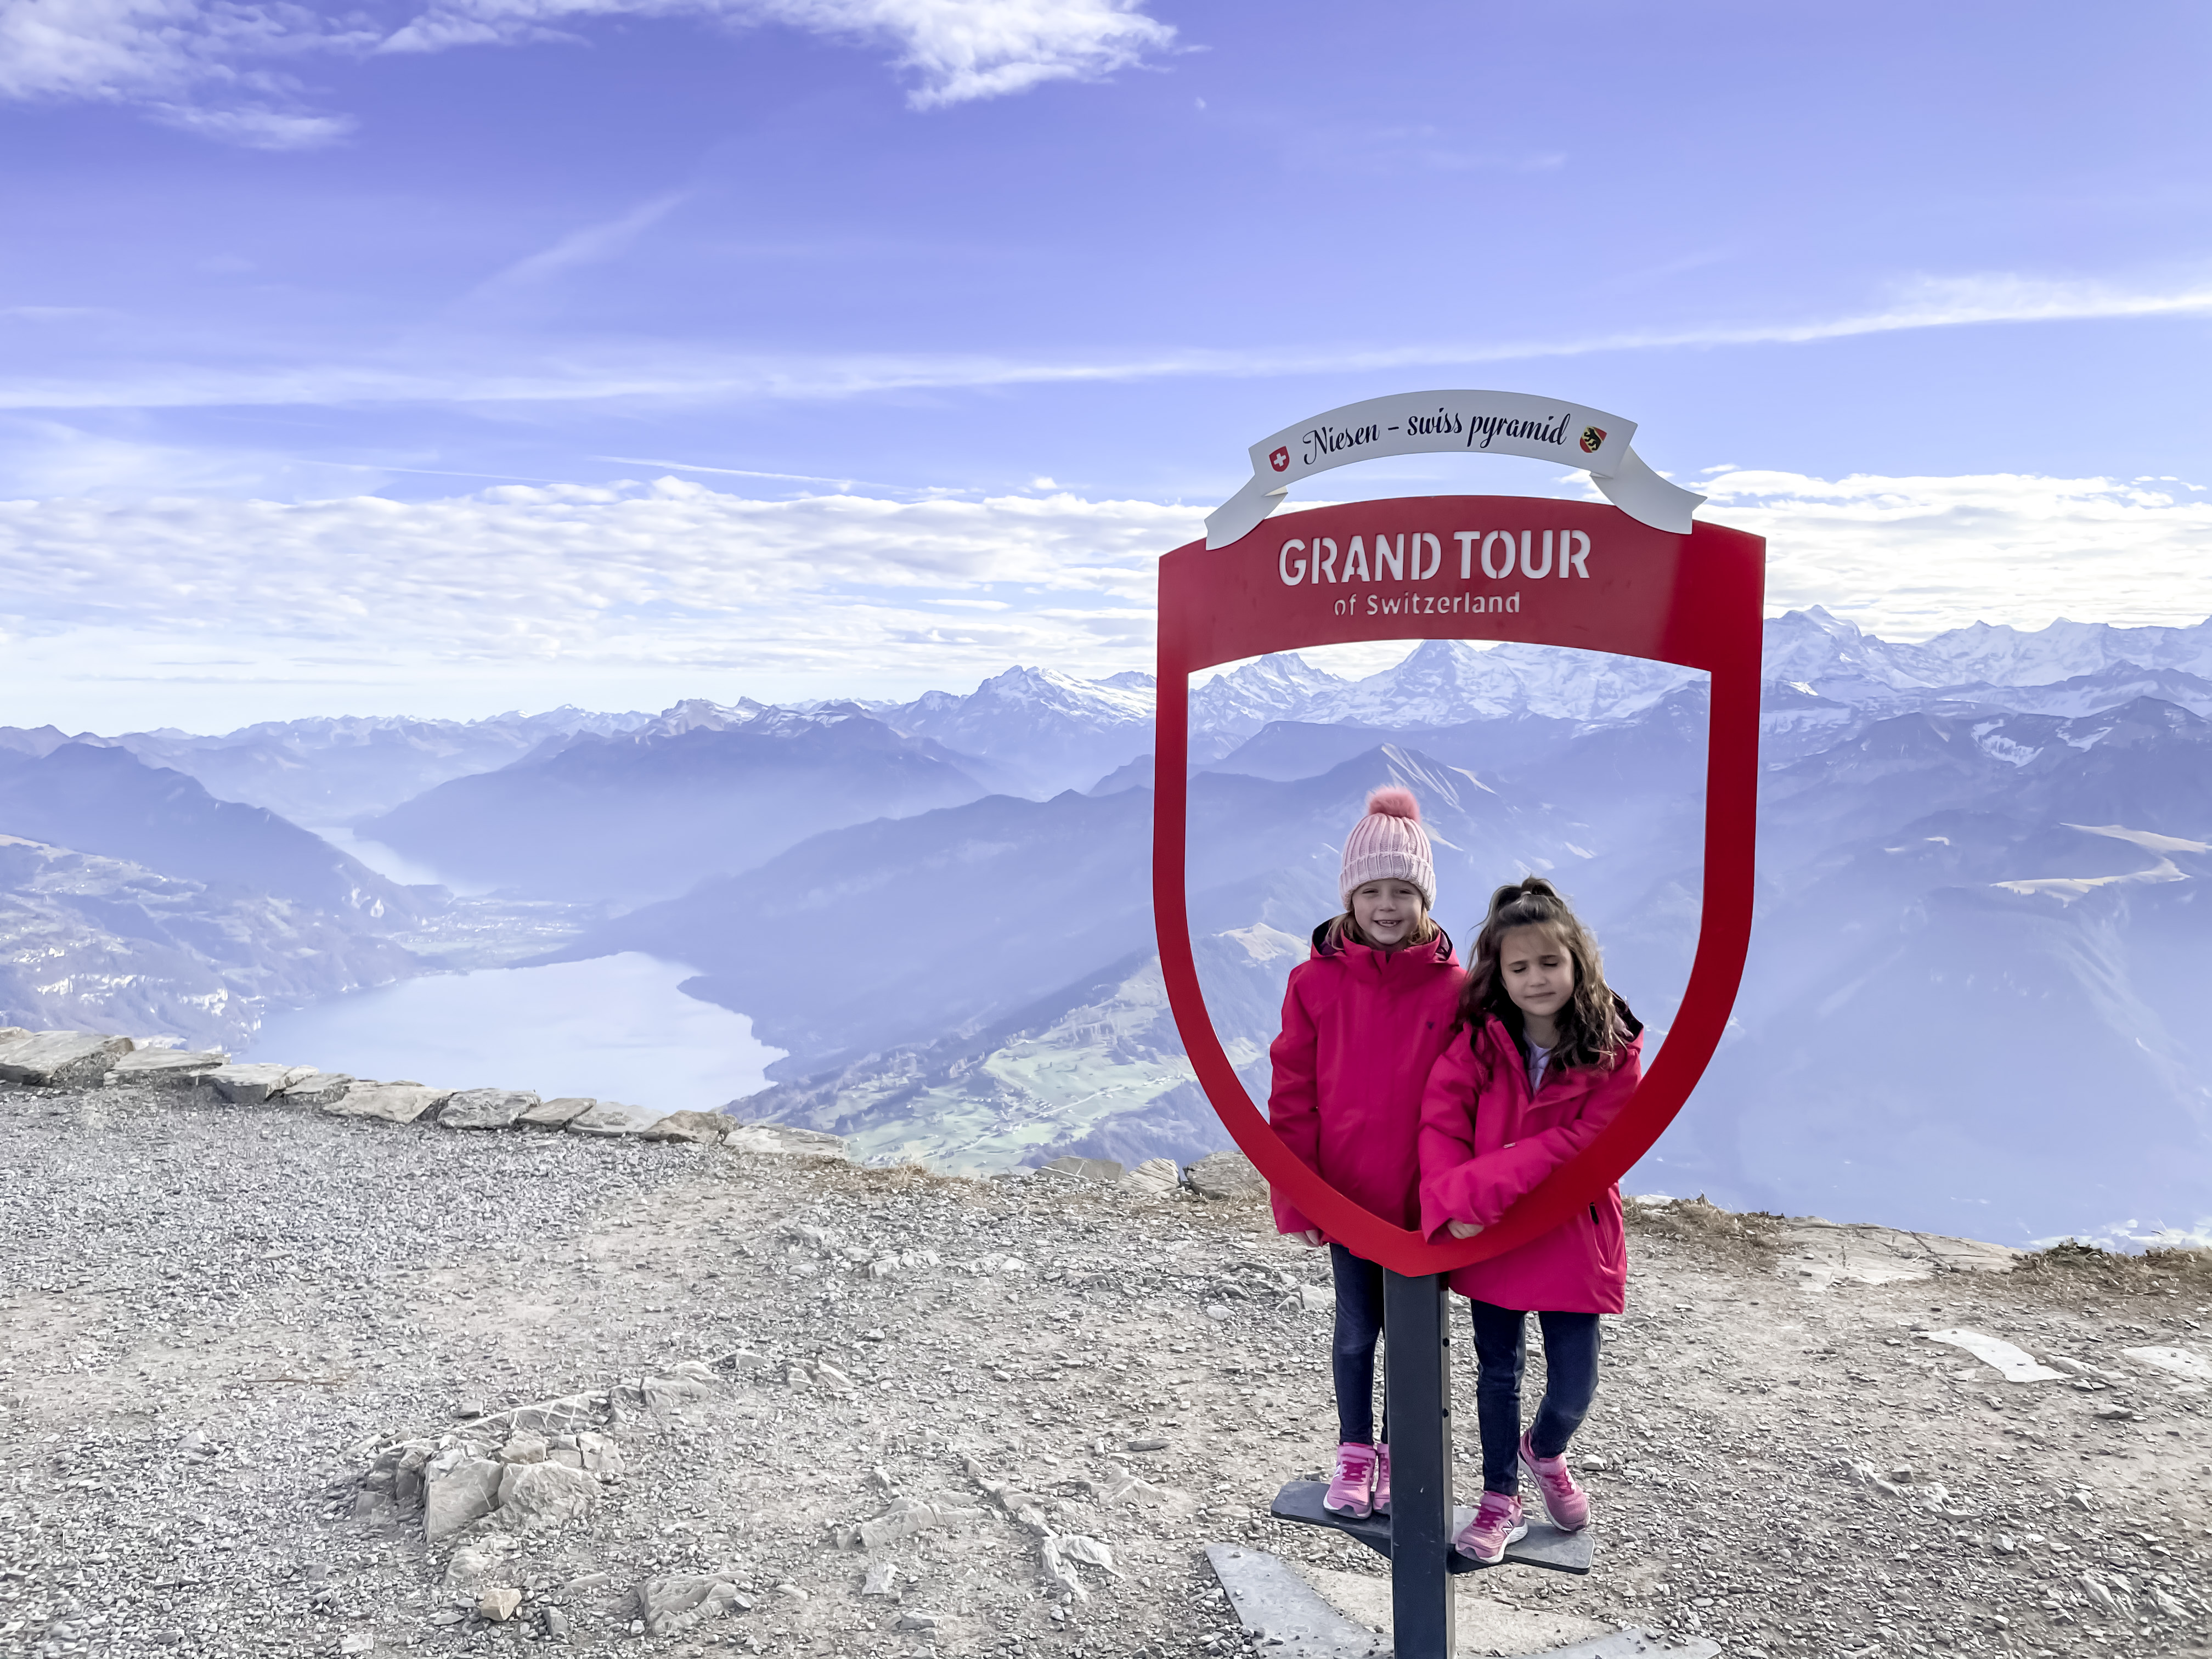 GRAND TOUR OF SWITZERLAND PHOTOS! Wandering Wisniewskis